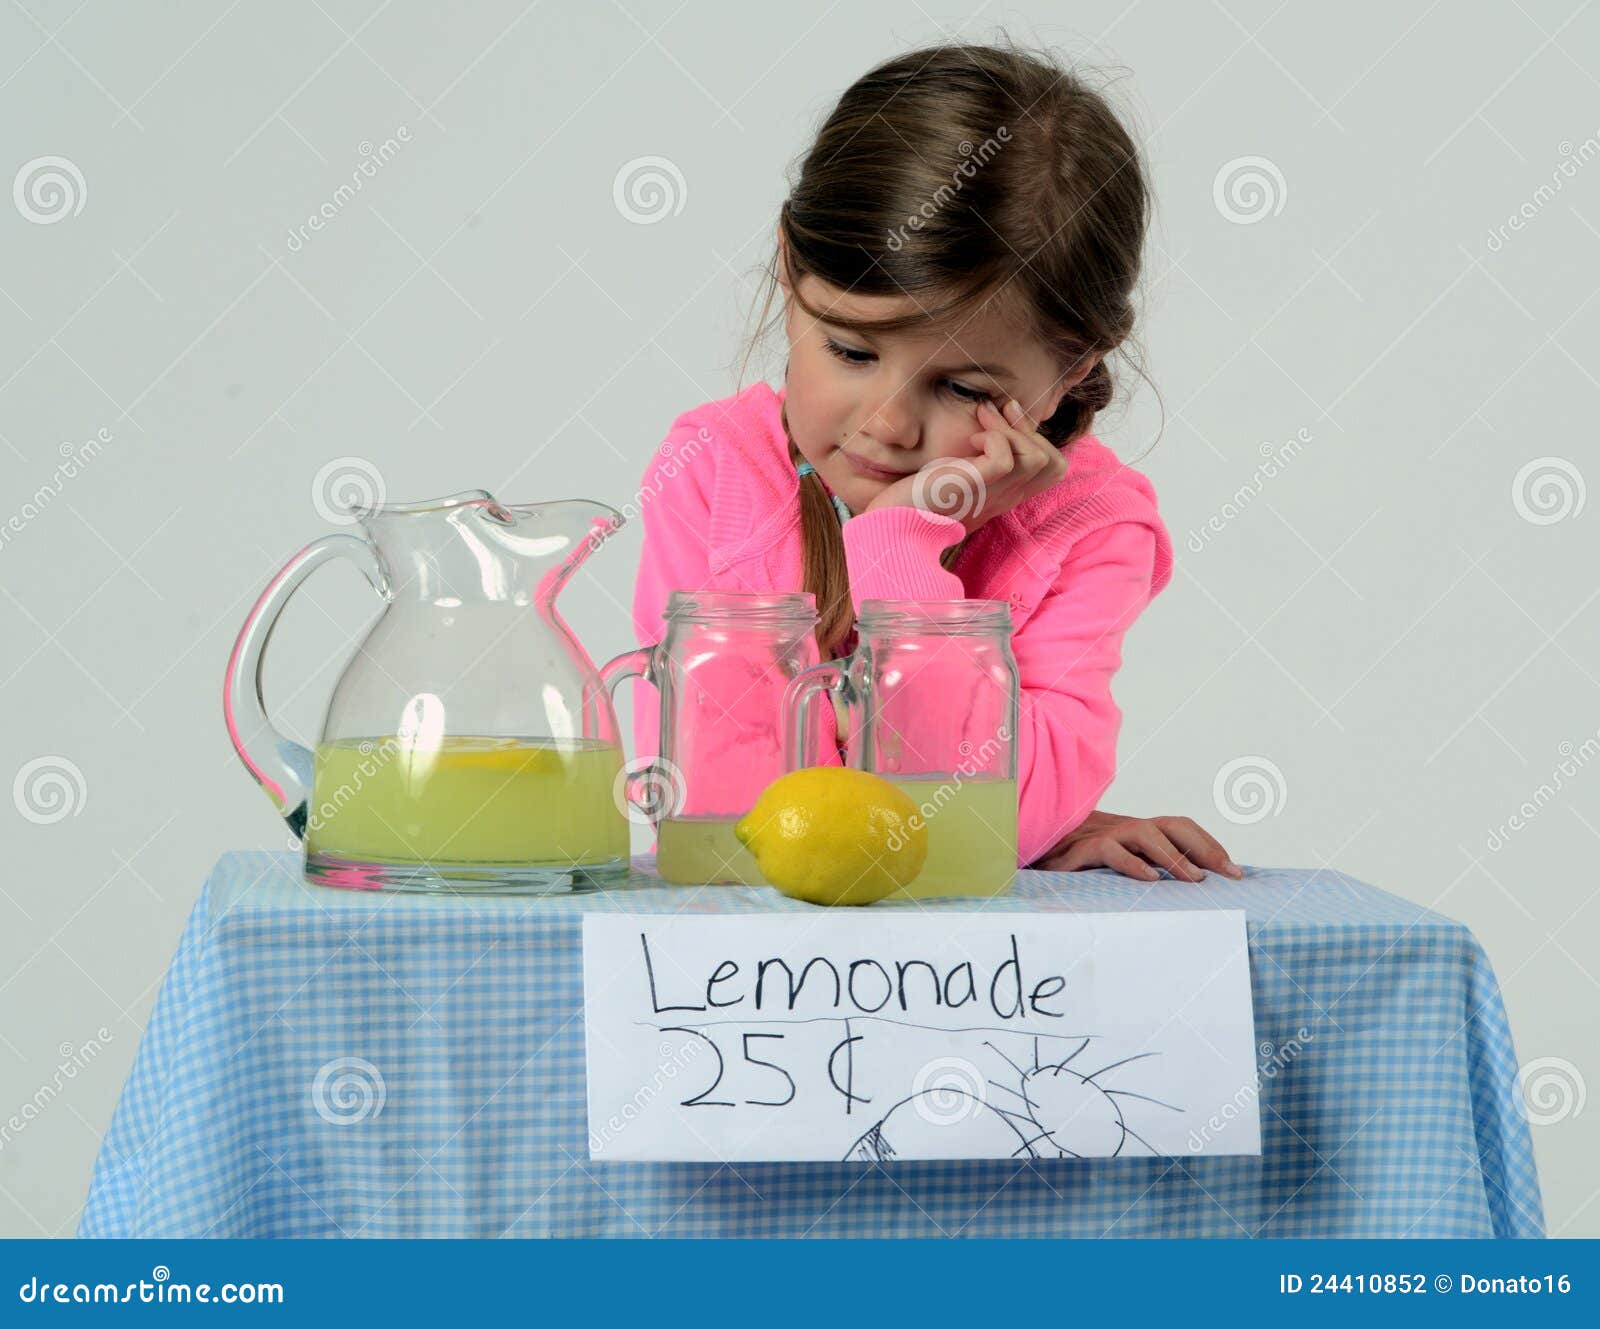 sad little girl at lemonade stand in summer